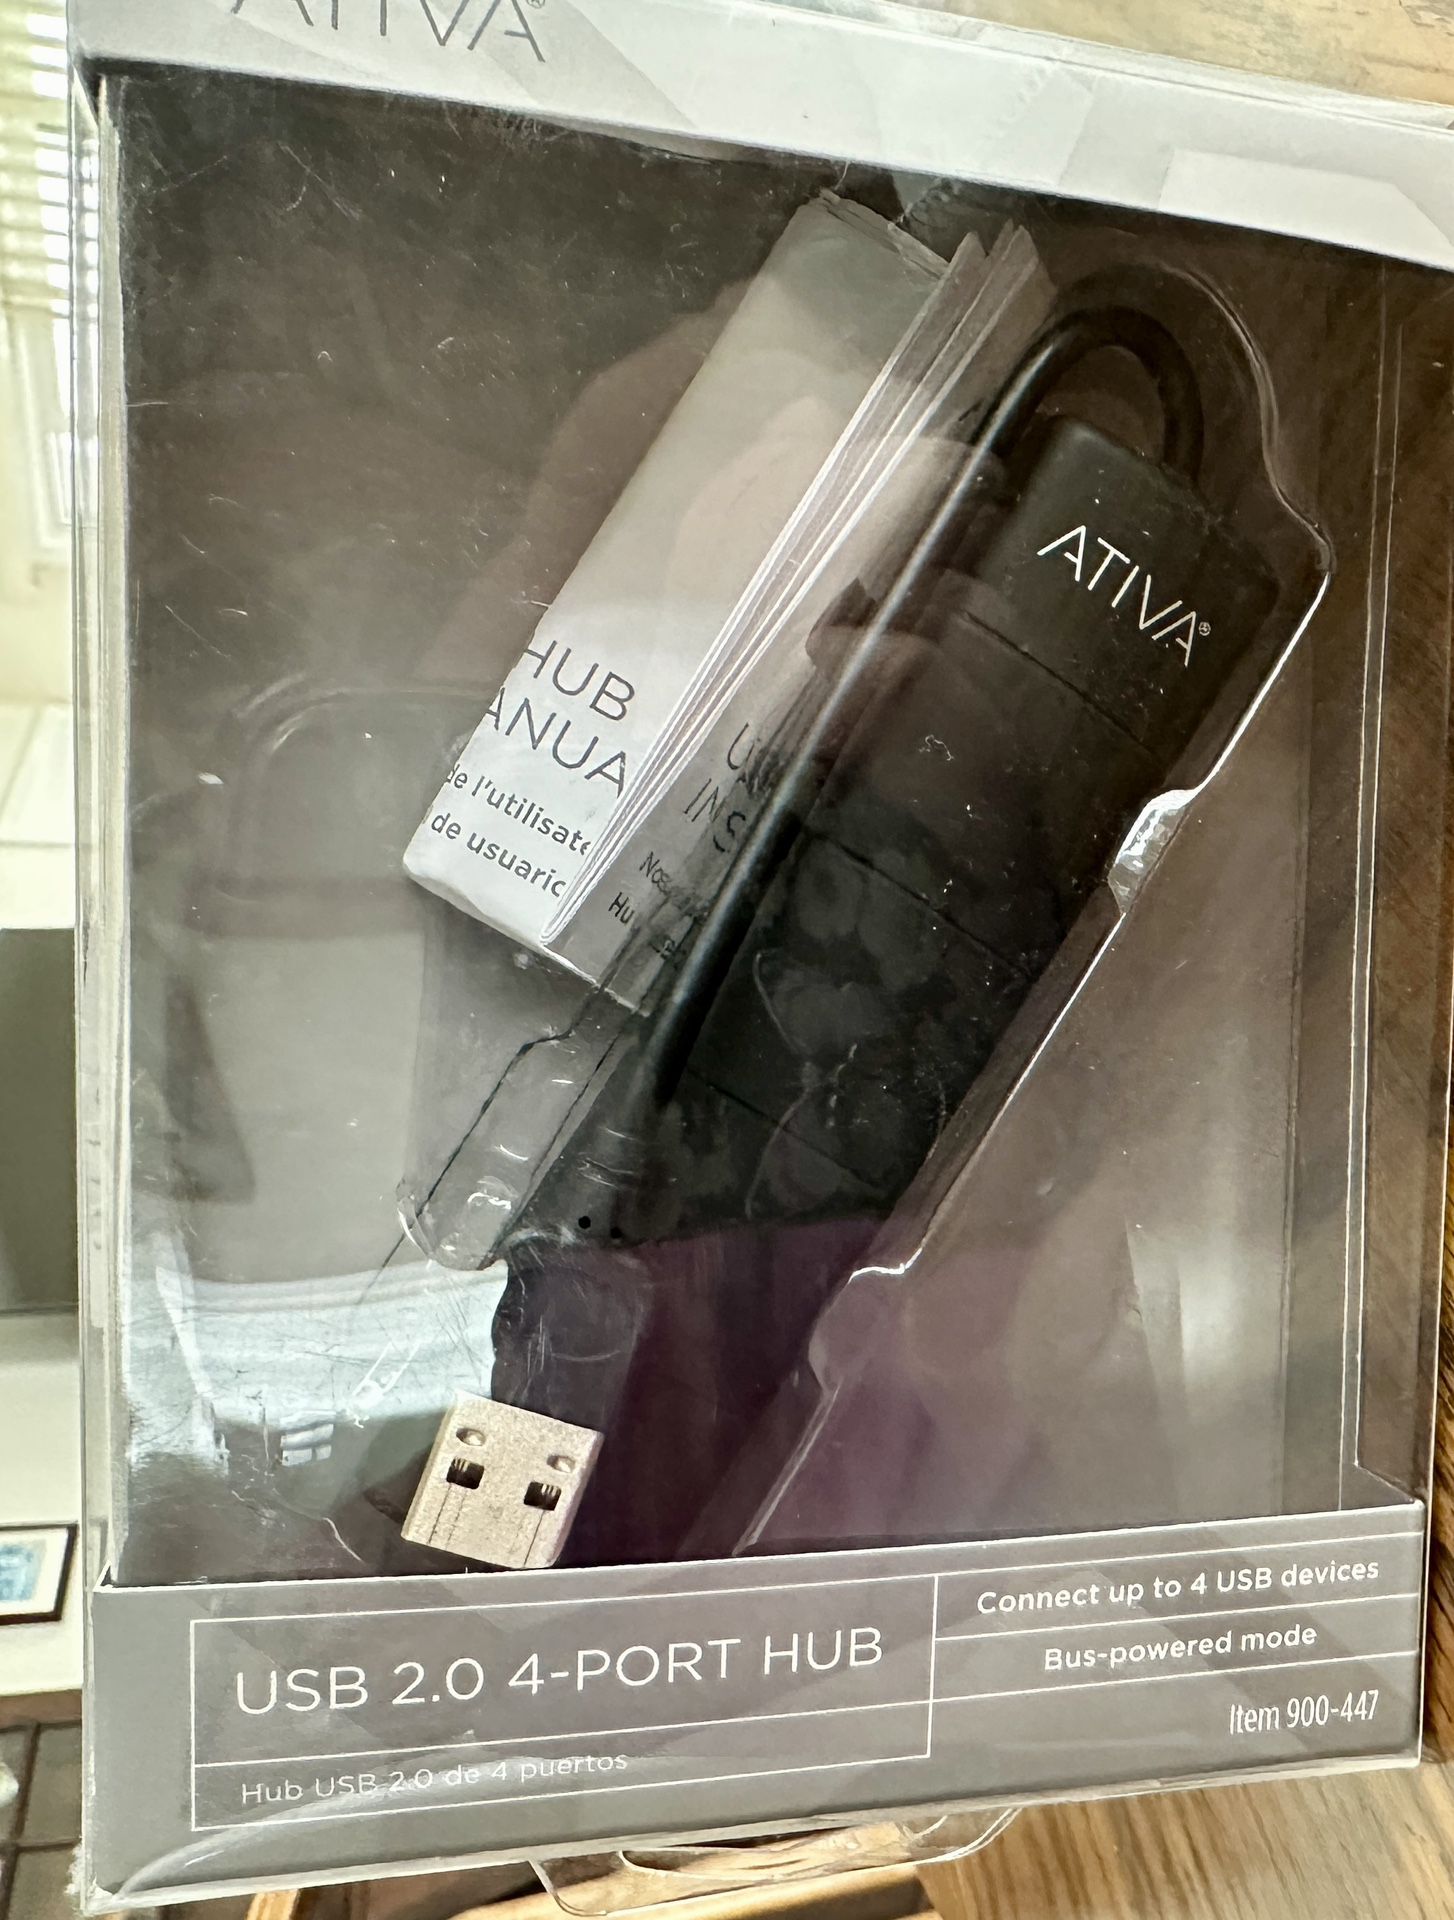 ATIVA USB 2.0 4-PORT HUB NEW